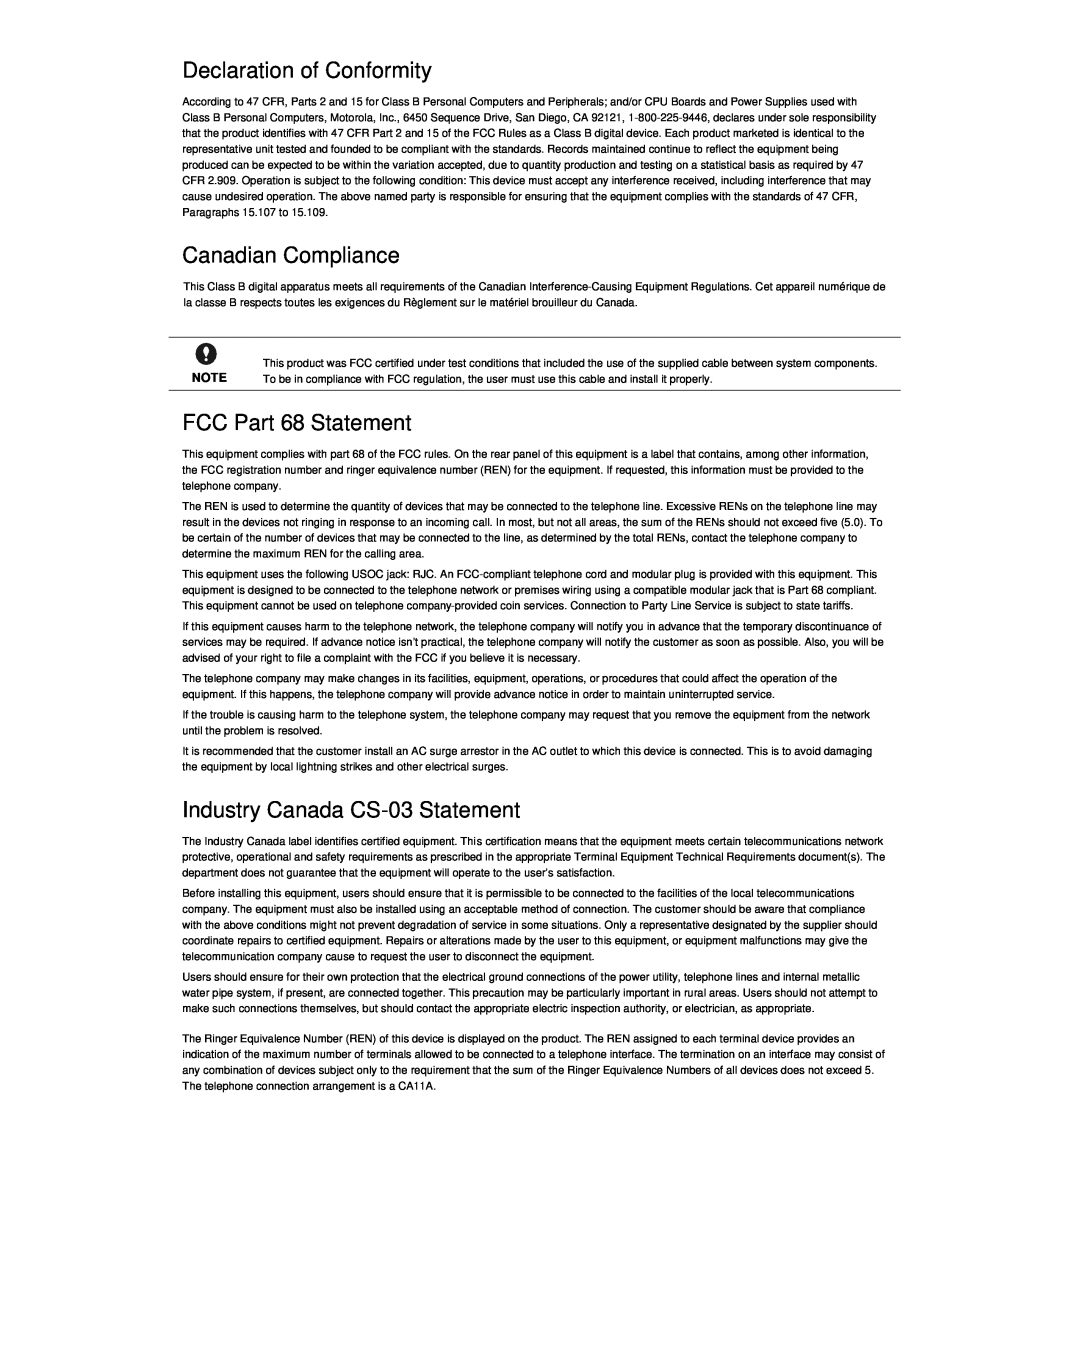 Motorola DCP501 Declaration of Conformity, Canadian Compliance, FCC Part 68 Statement, Industry Canada CS-03Statement 